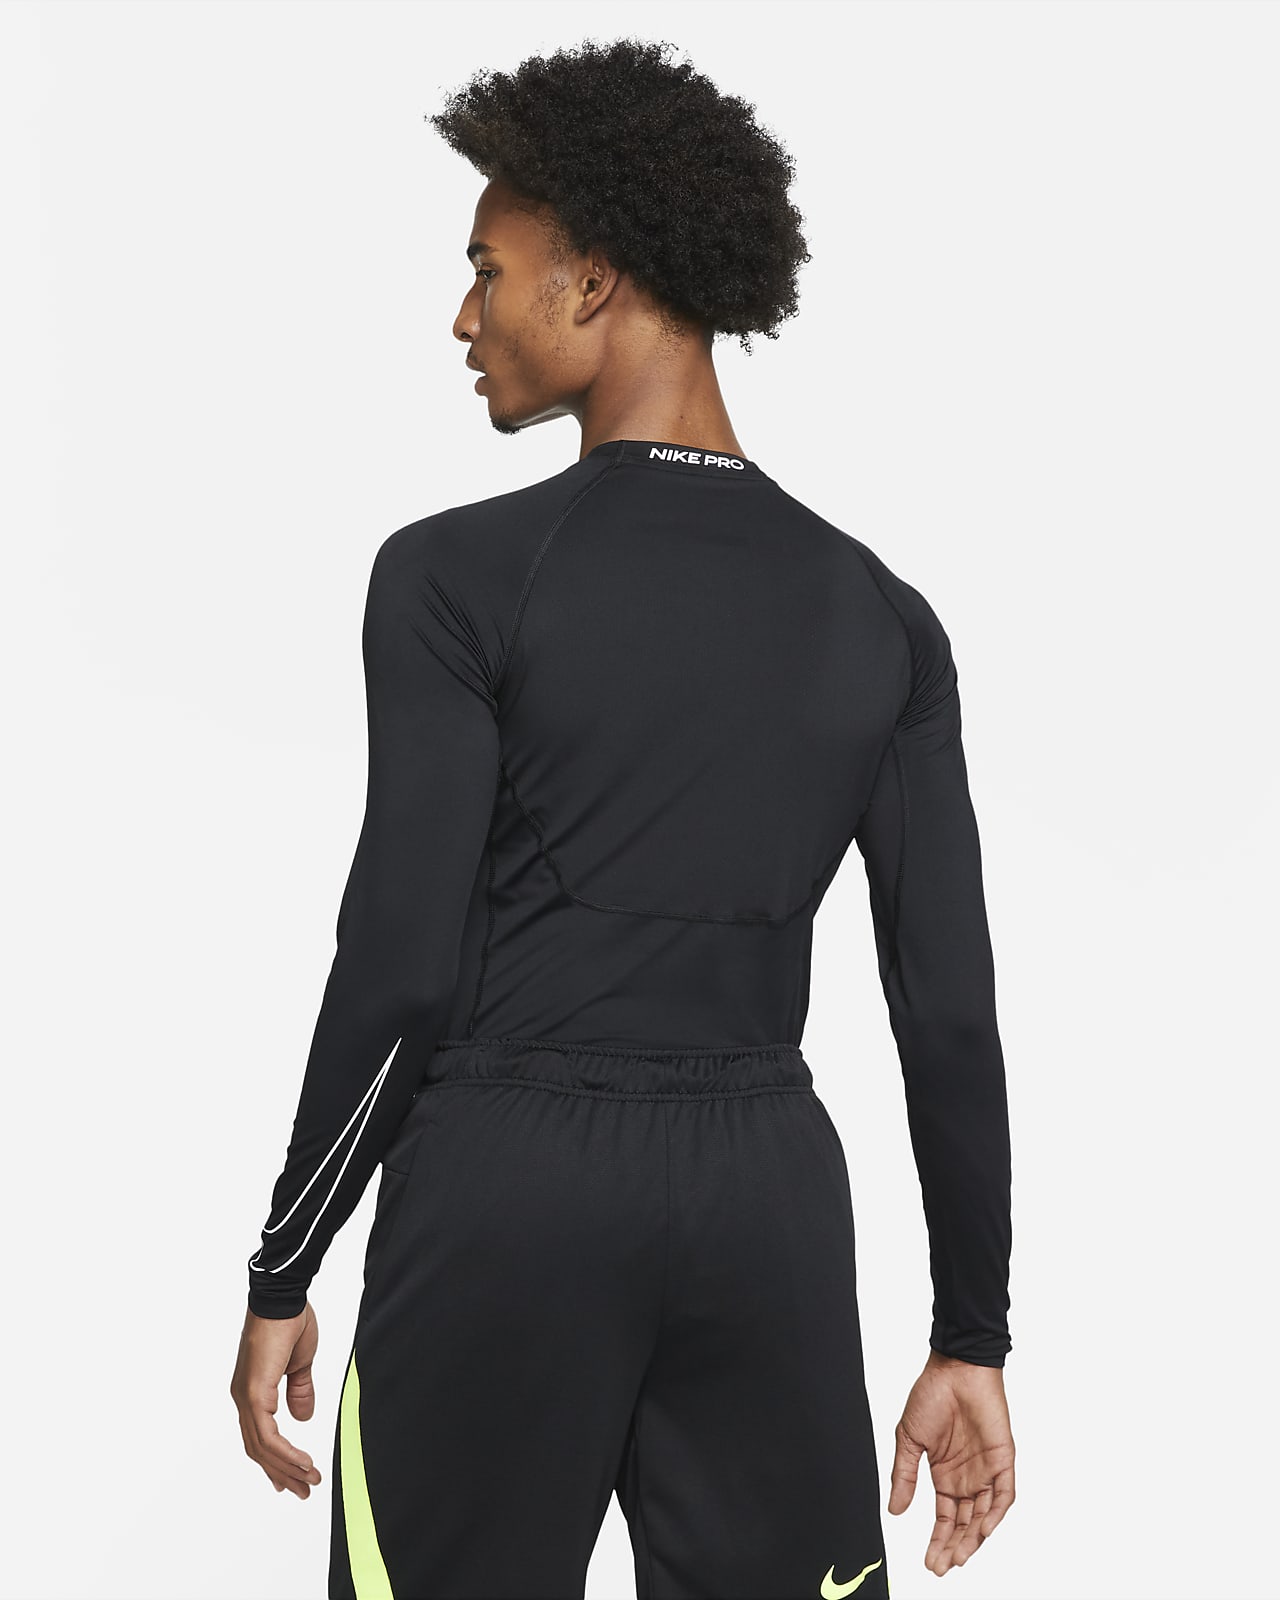 Nike Pro Men's Compression Dri Fit Shirt Size XL Base Layer Vented